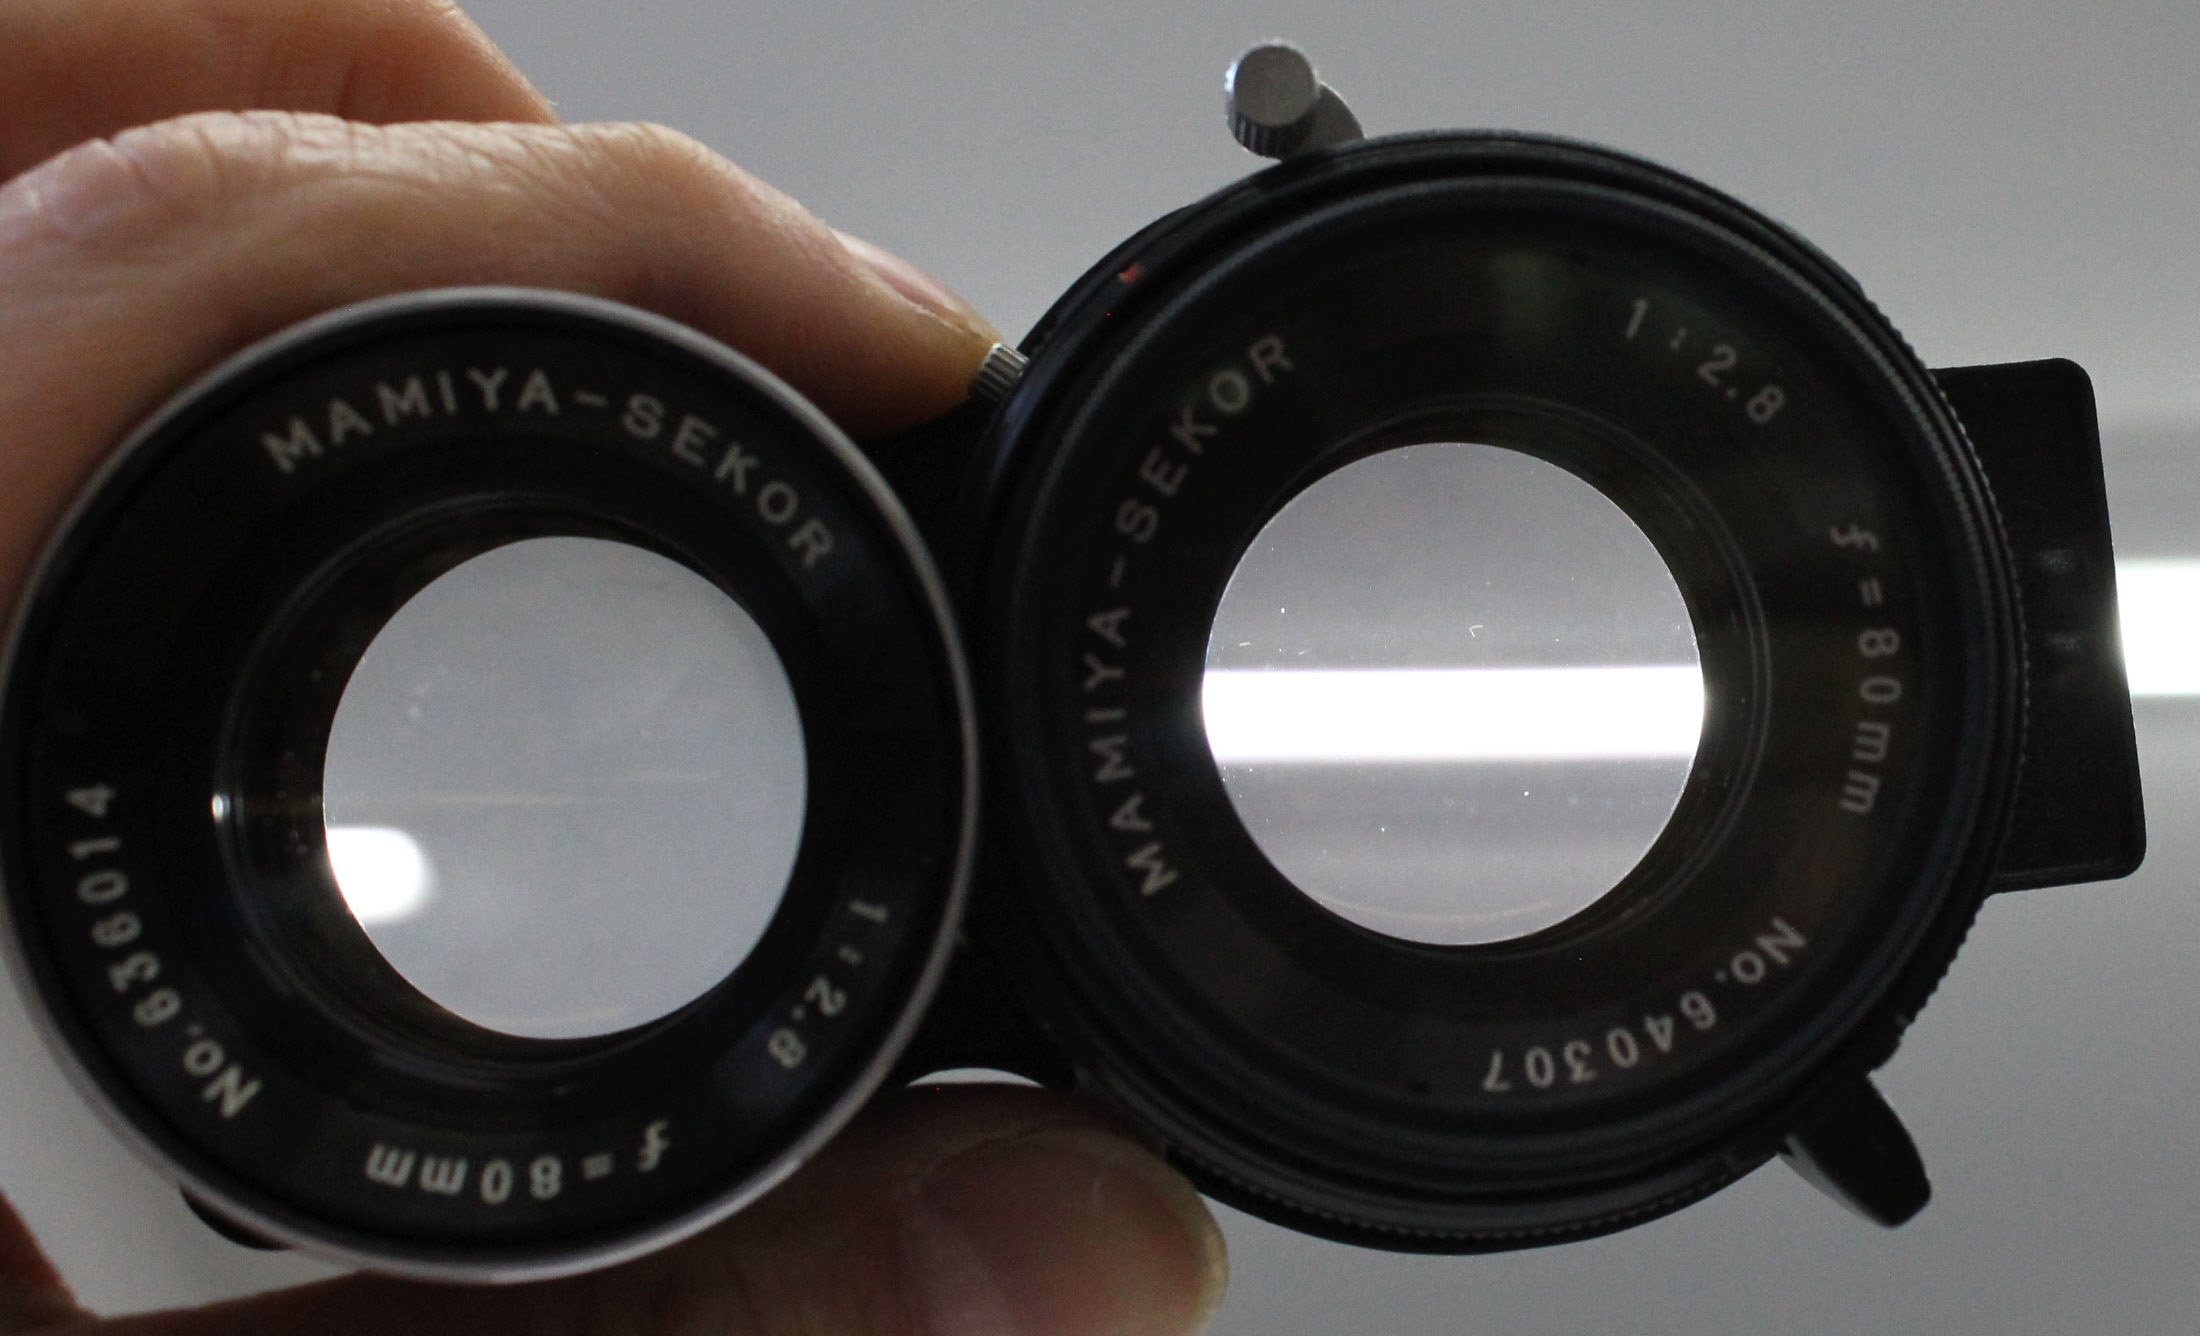  Mamiya C220 Pro TLR Medium Format Camera with 80mm F2.8 and CdS Magnifying Hood from Japan Photo 14